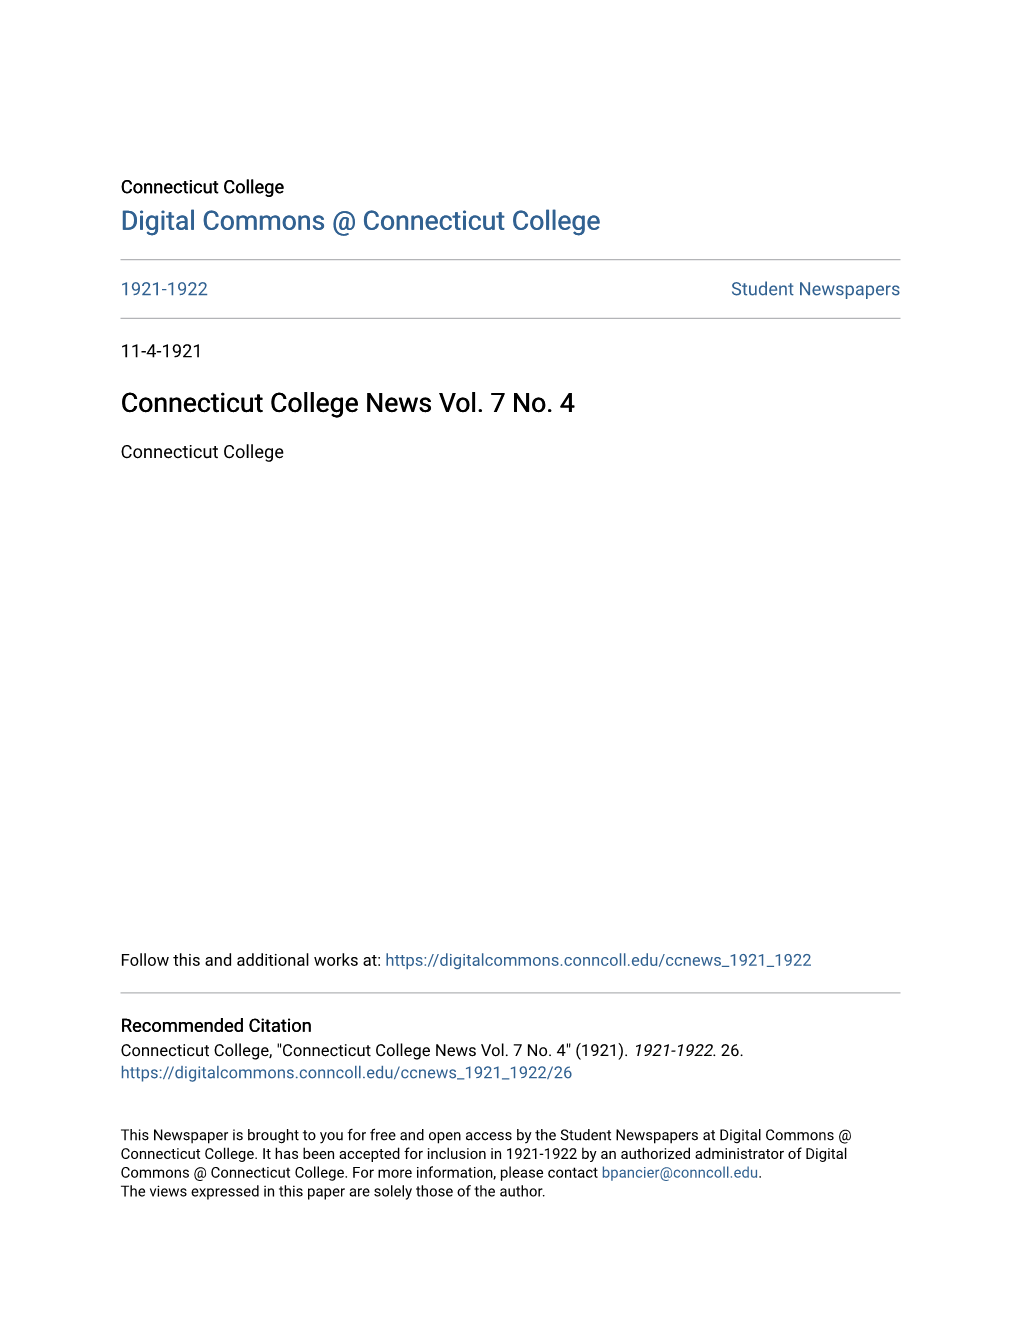 Connecticut College News Vol. 7 No. 4